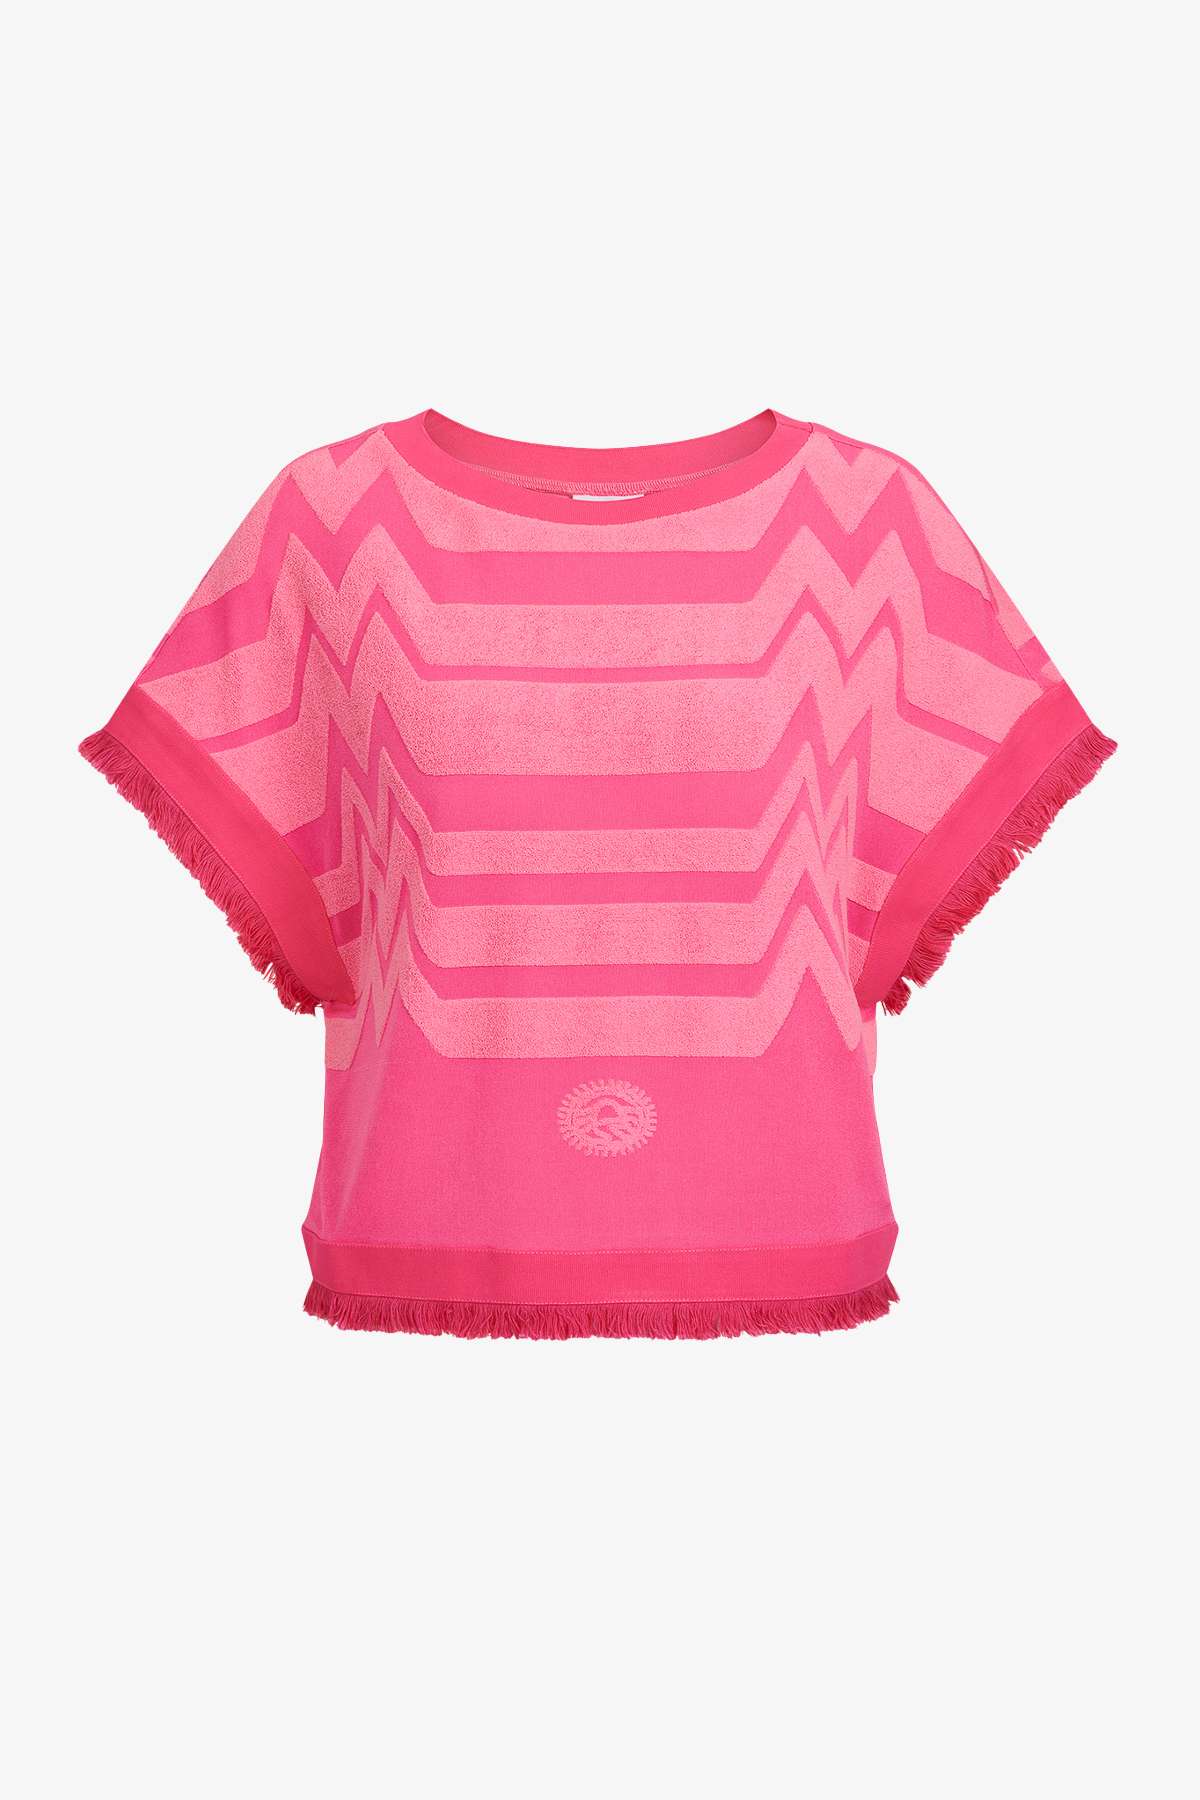 Sportalm tričko Tros candy pink Velikost: 34